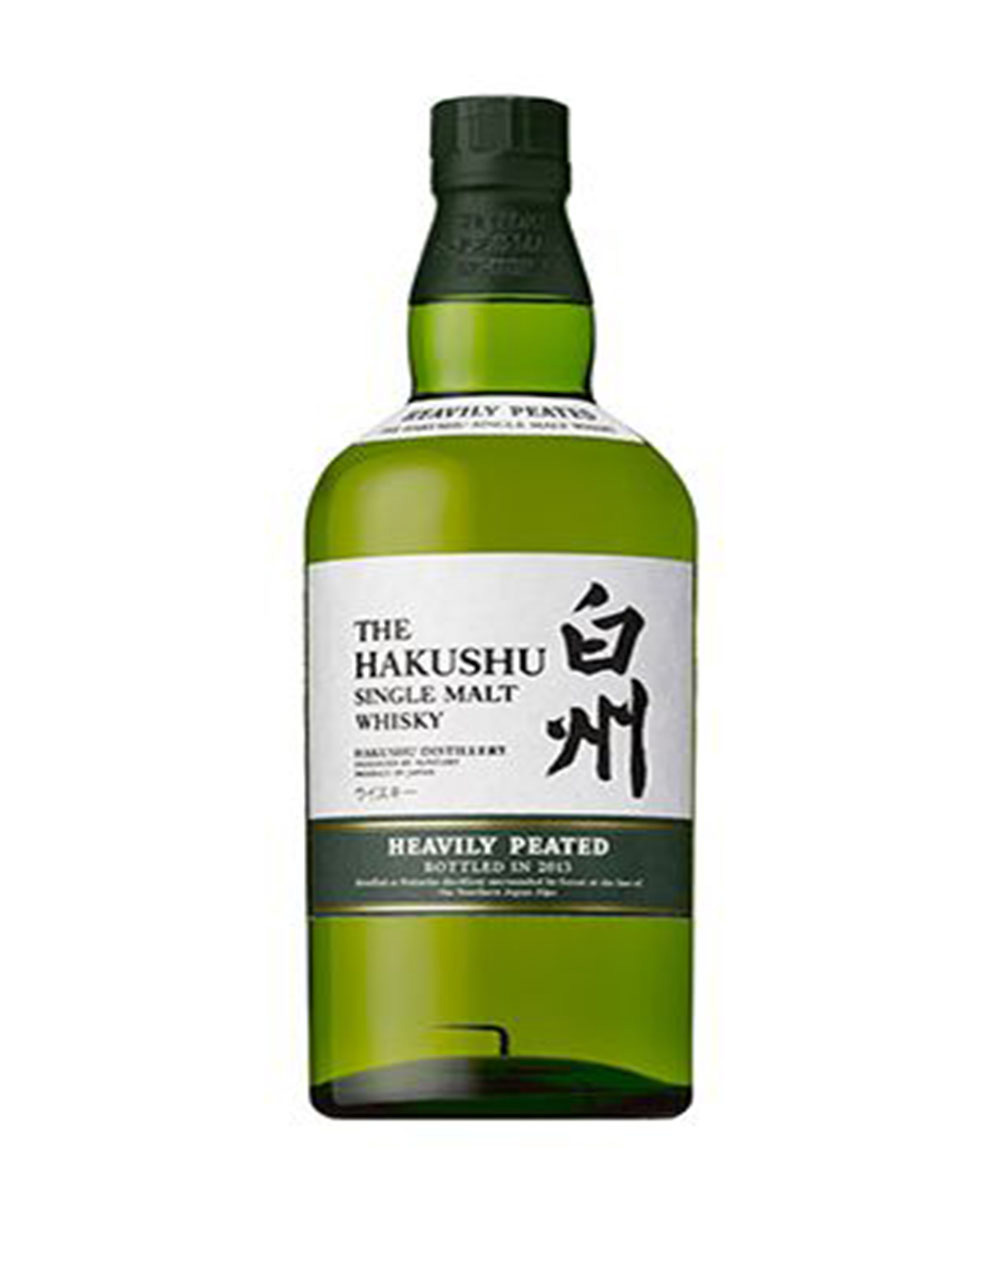 The Hakushu Heavily Peated Single Malt Whisky (2013 Release)